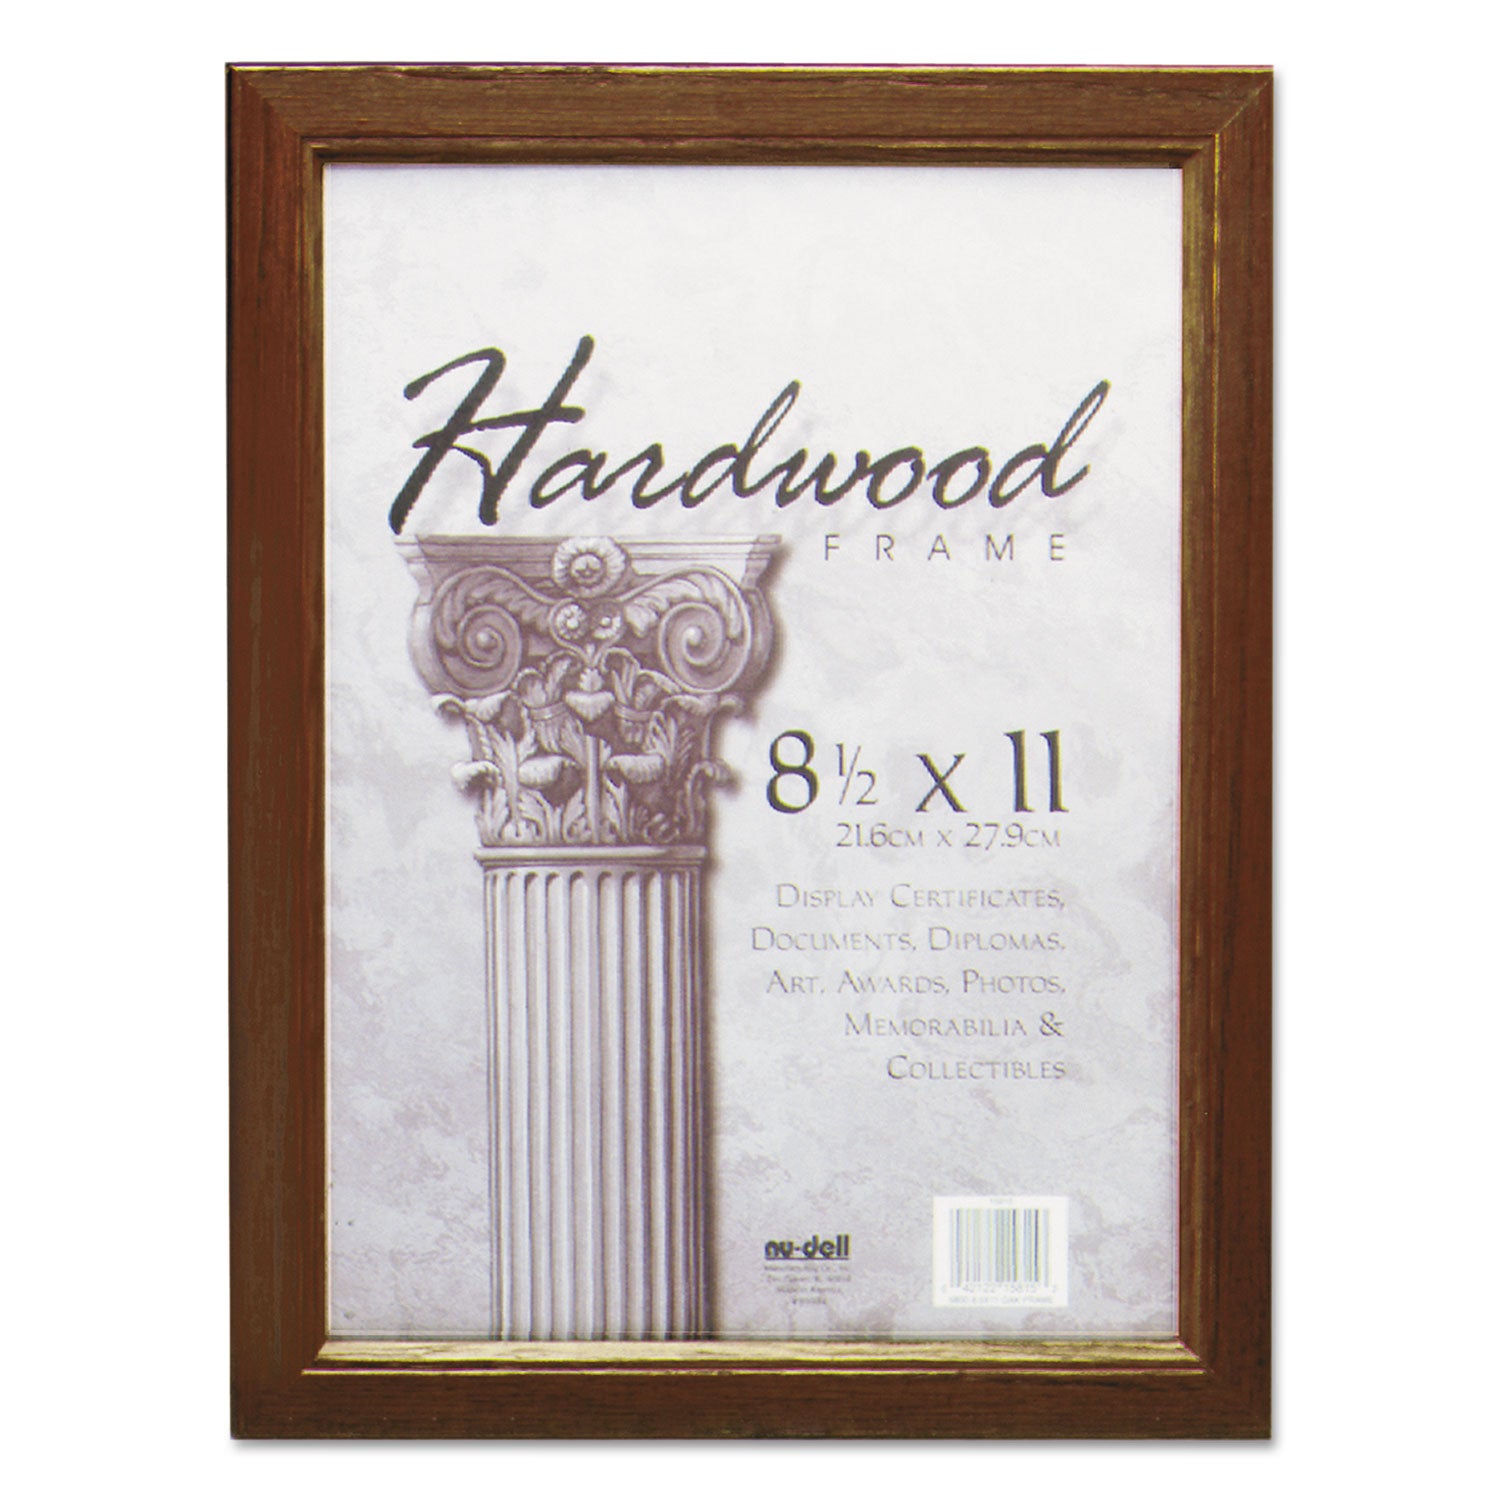 Solid Oak Hardwood Frame, 8.5 x 11, Walnut Finish - 